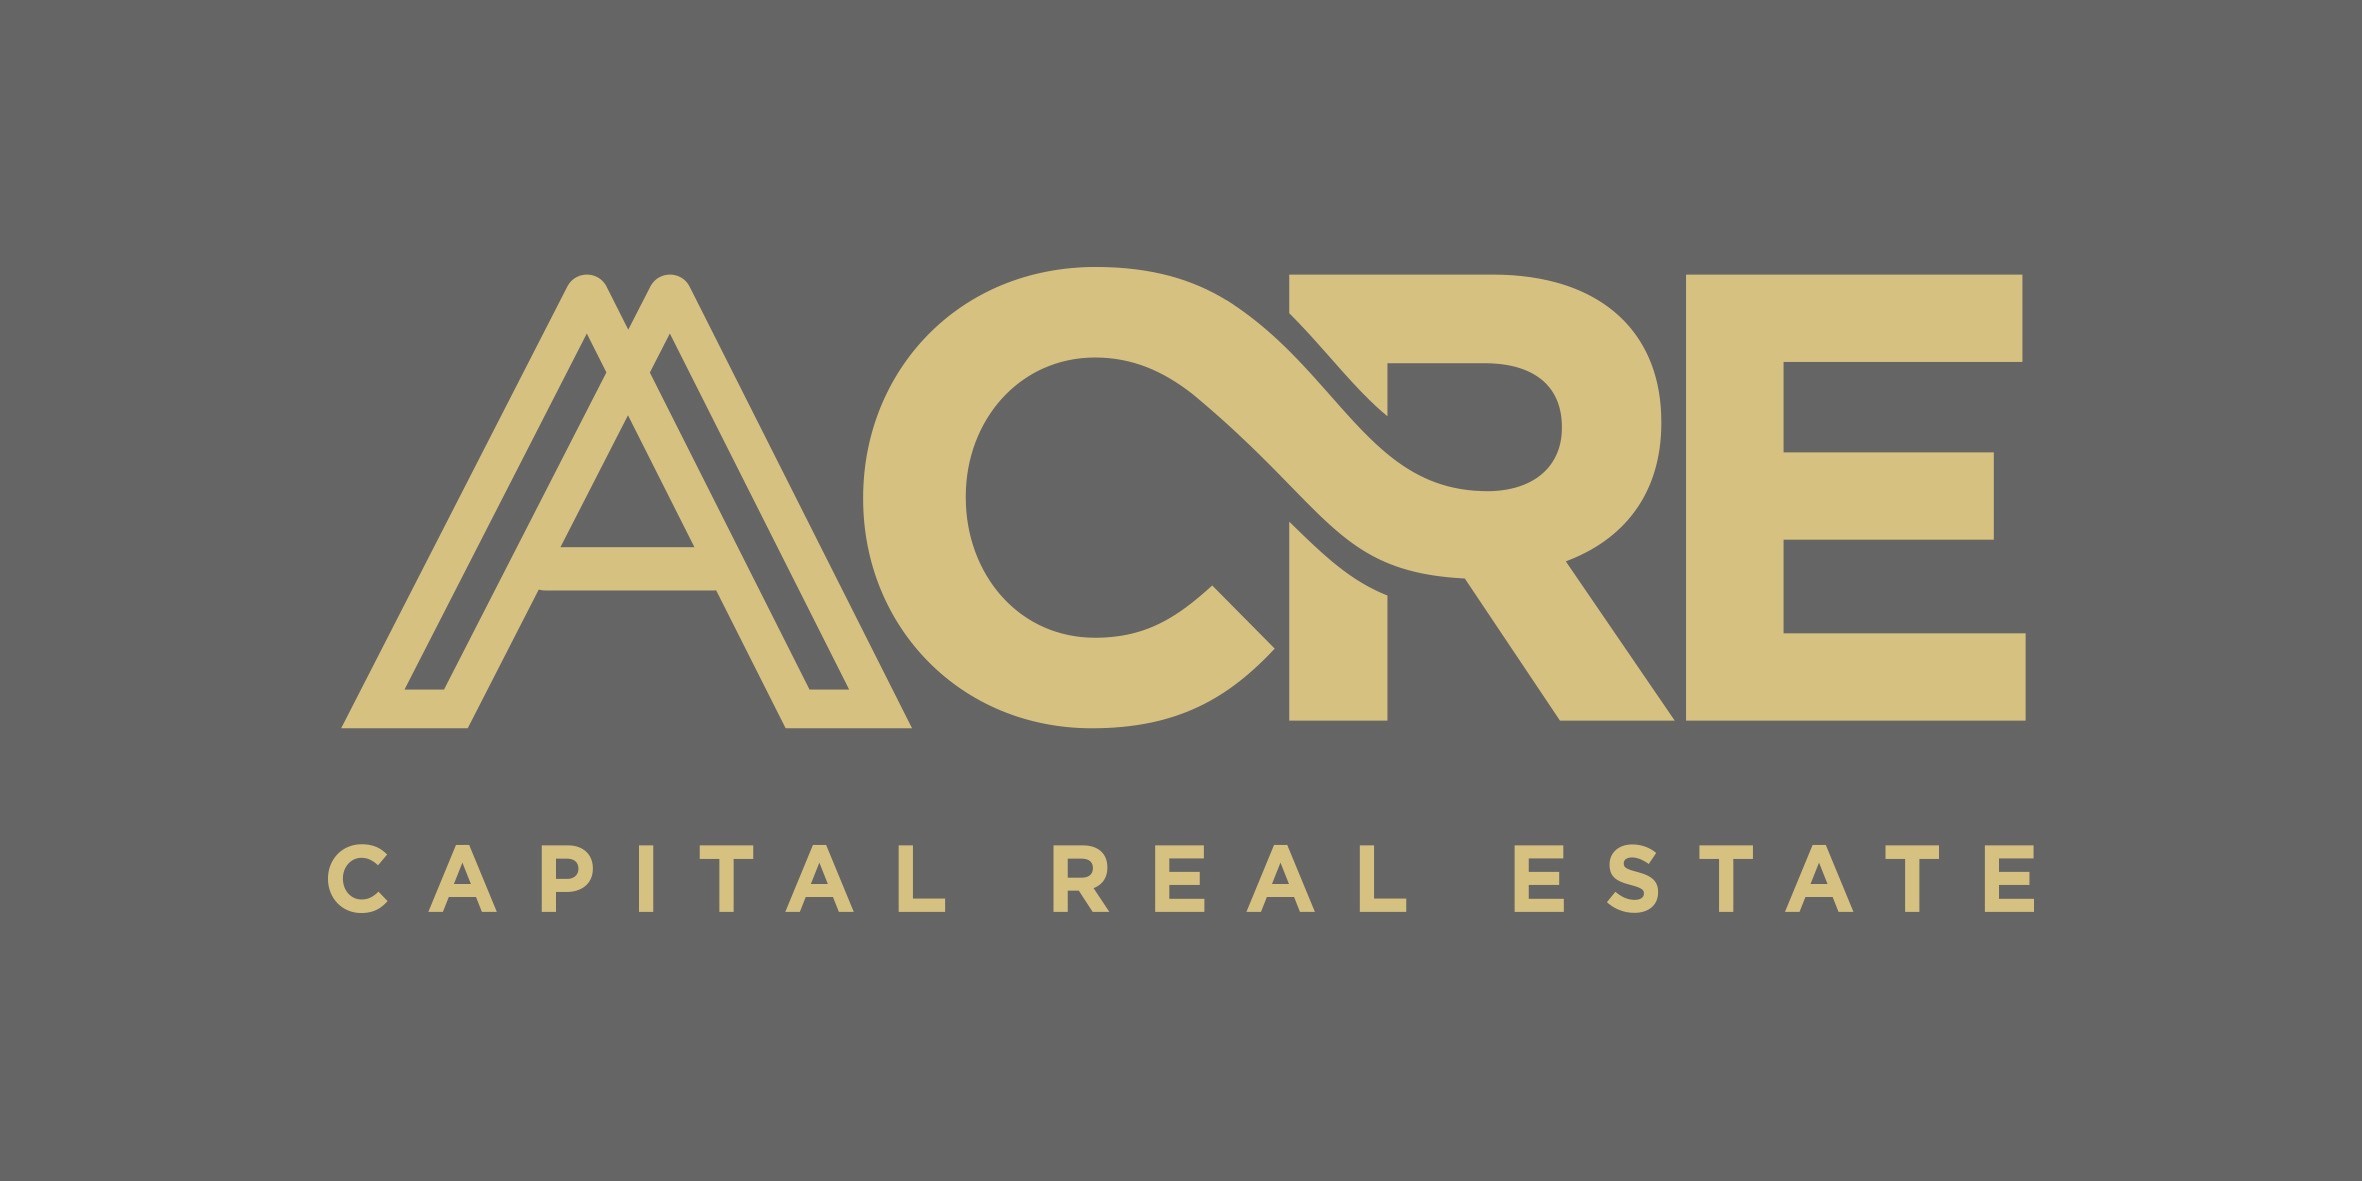 Acre Capital Real Estate